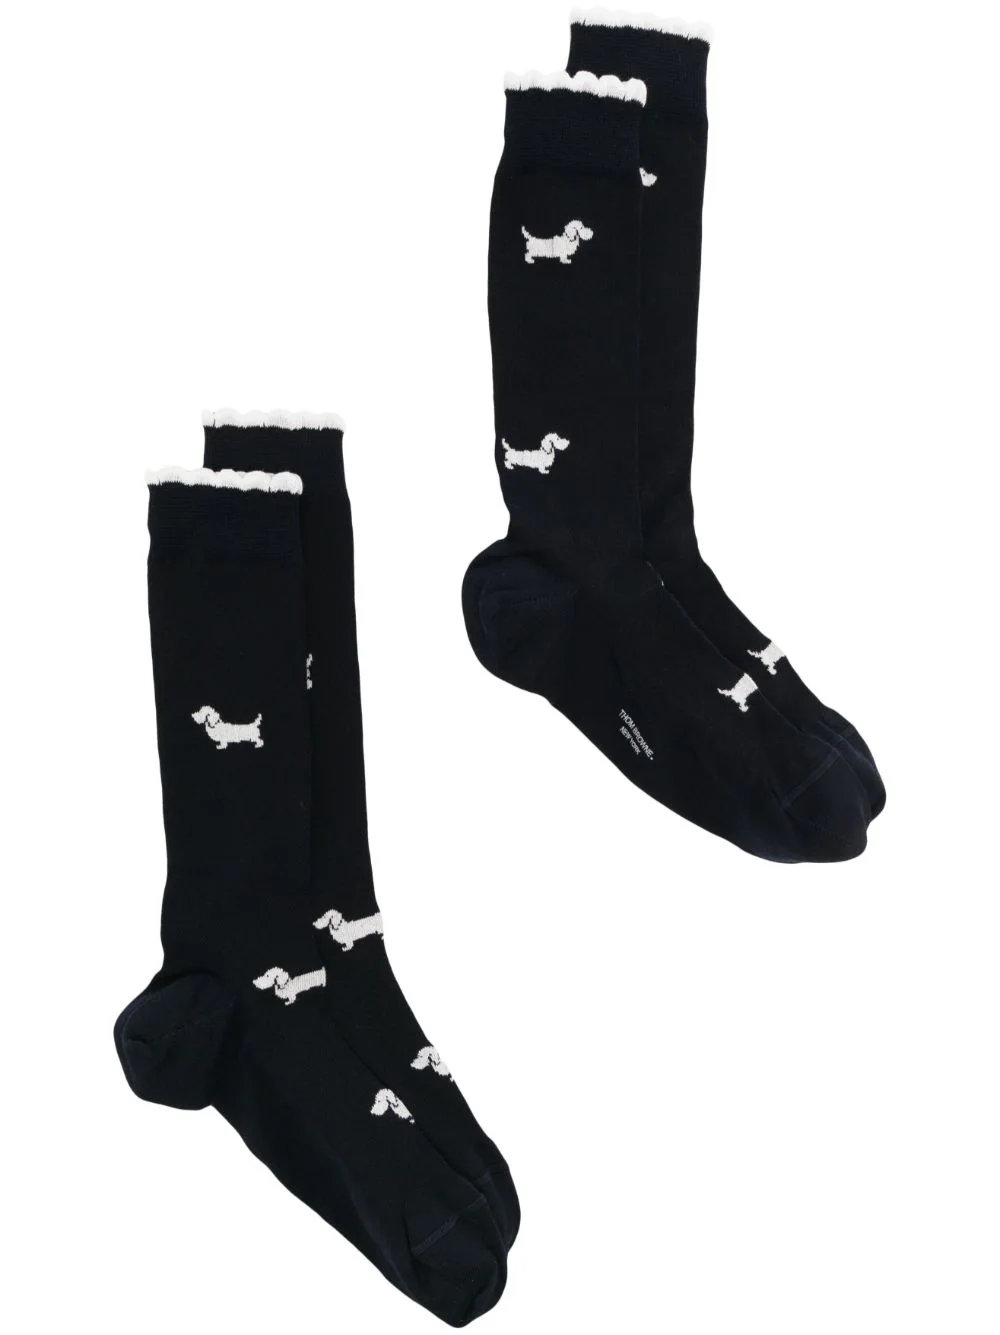 Mid Calf Length Hector Jersey Intarsia Pointelle Socks Cotton W/ Scalloped Edge Navy